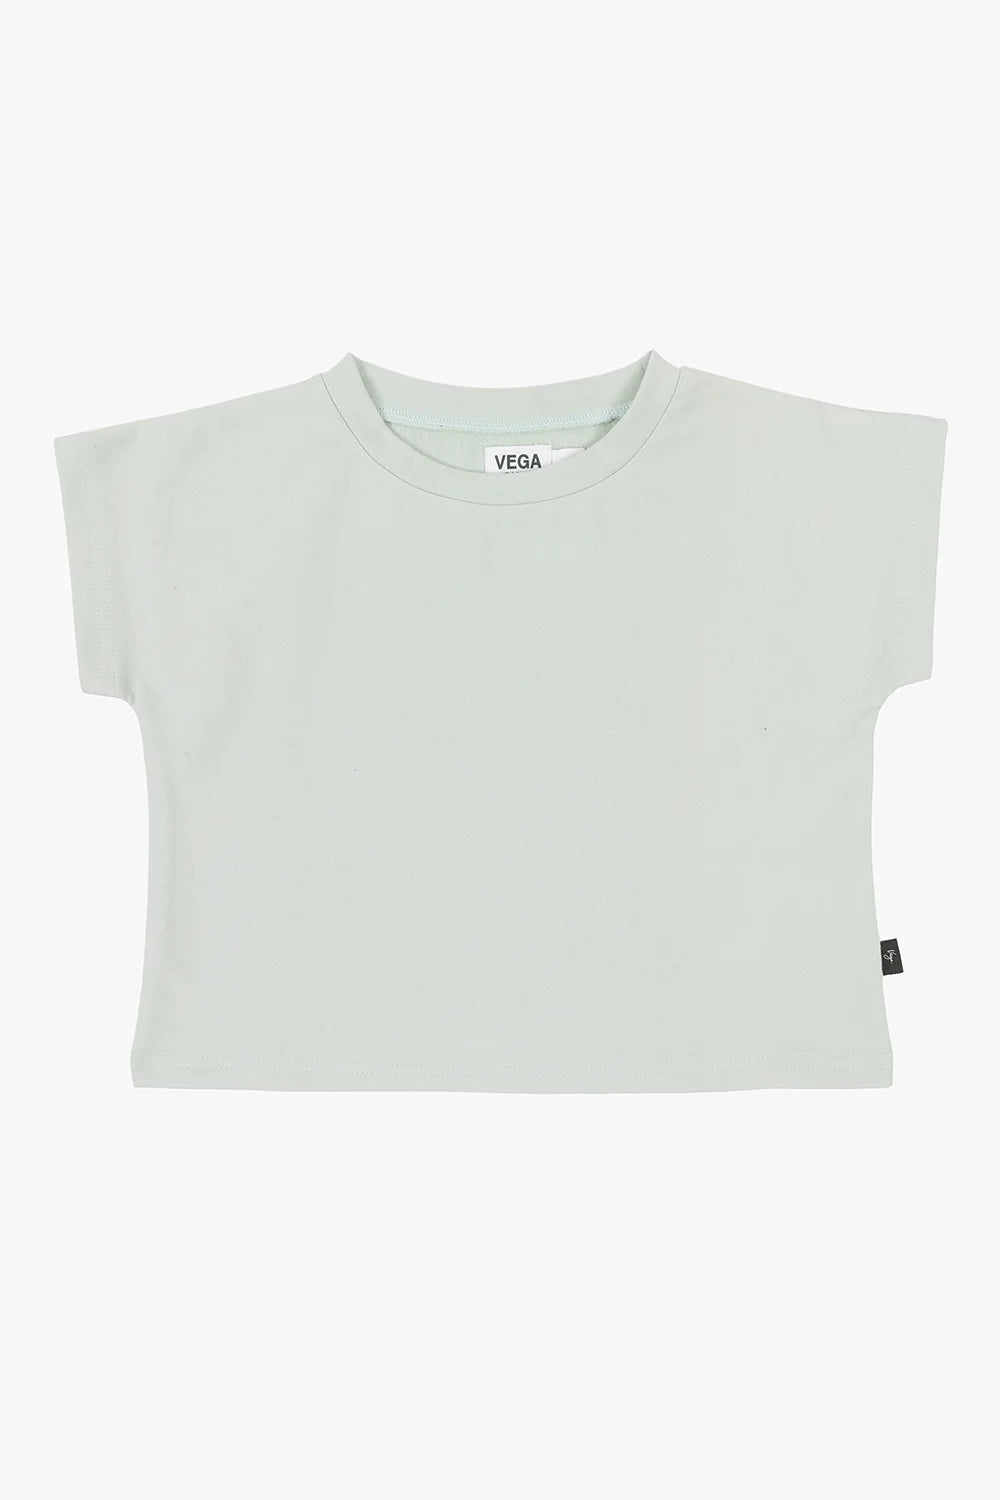 Vega Basics - coco t-shirt - mint